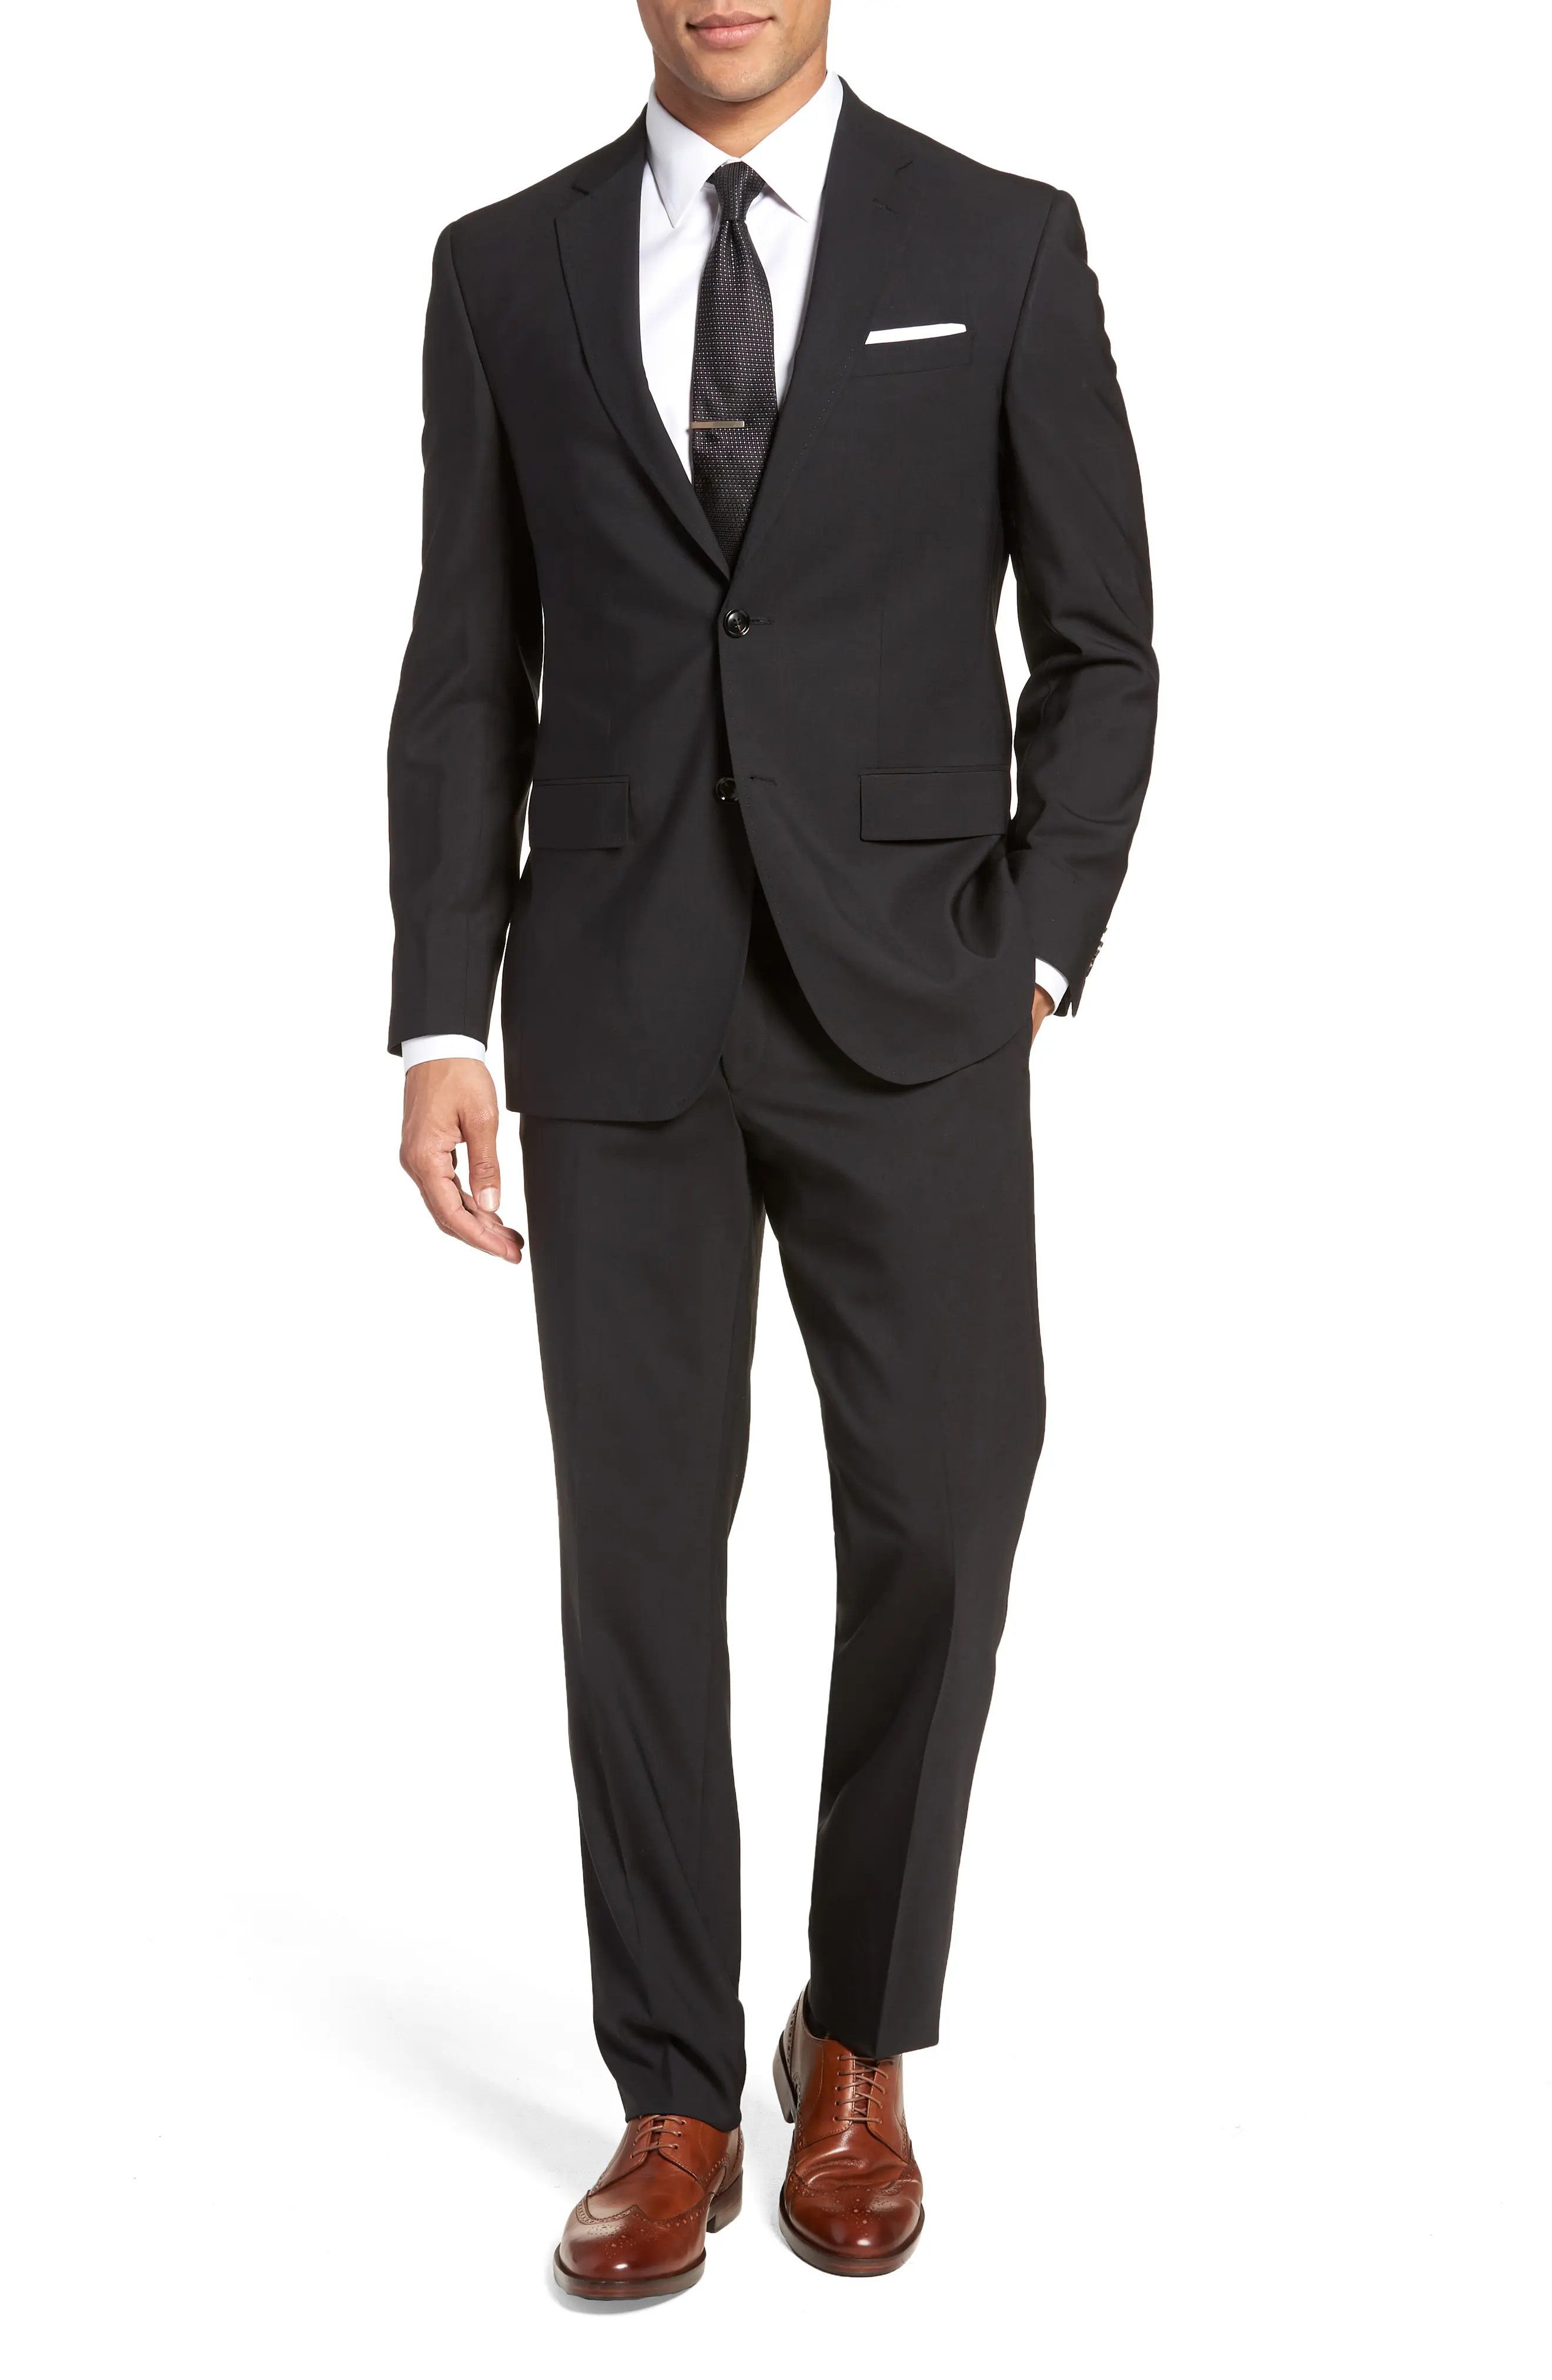 Ted Baker London Jay Trim Fit Solid Wool Suit in Black at Nordstrom, Size 40 Regular | Nordstrom